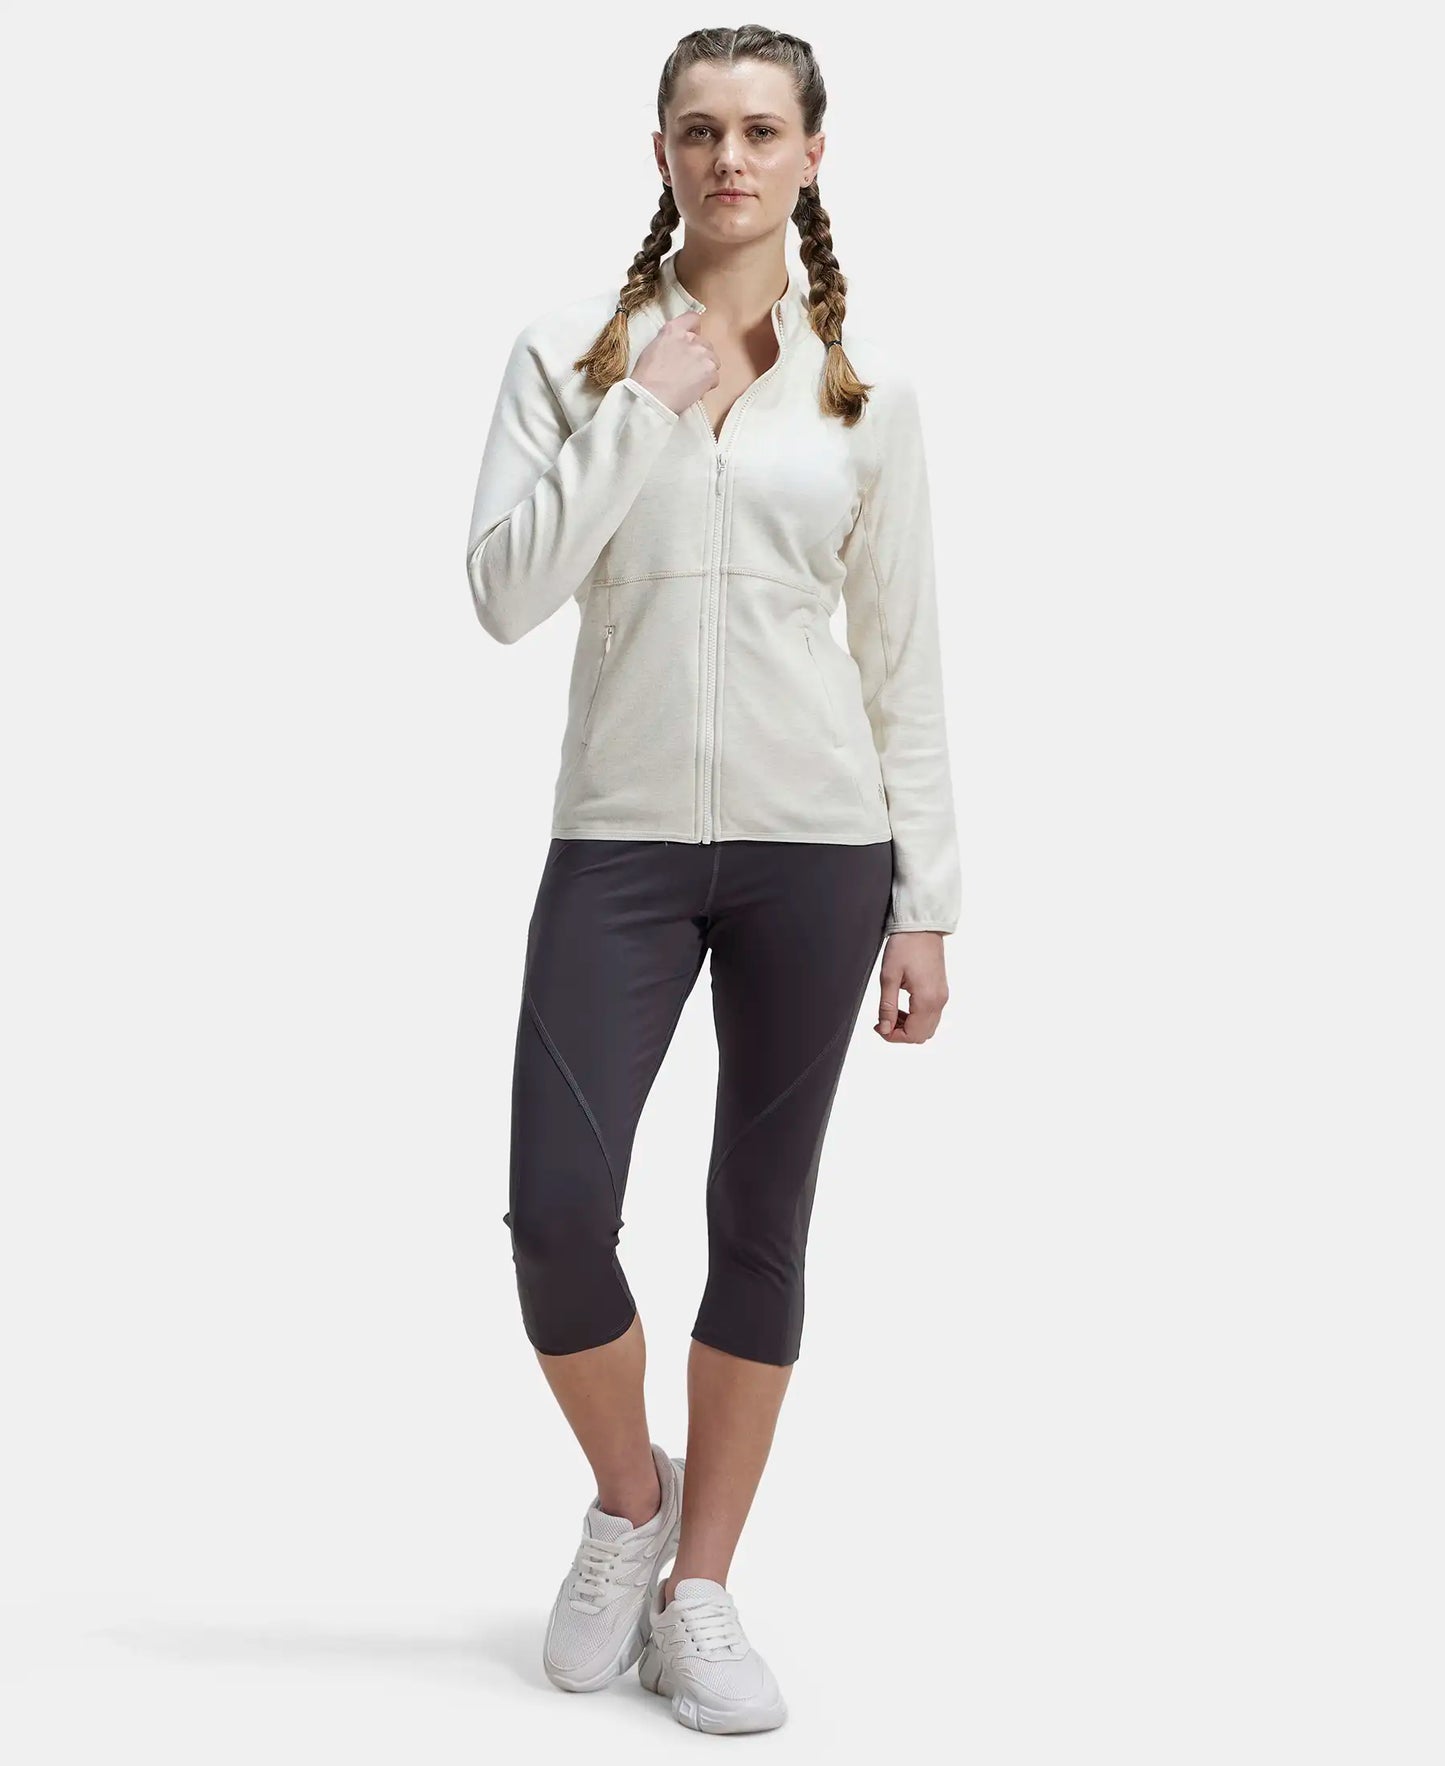 Polyester Cotton Interlock Slim Fit Full Zip High Neck Jacket with Convenient Zipper Pockets - Cream Melange-4